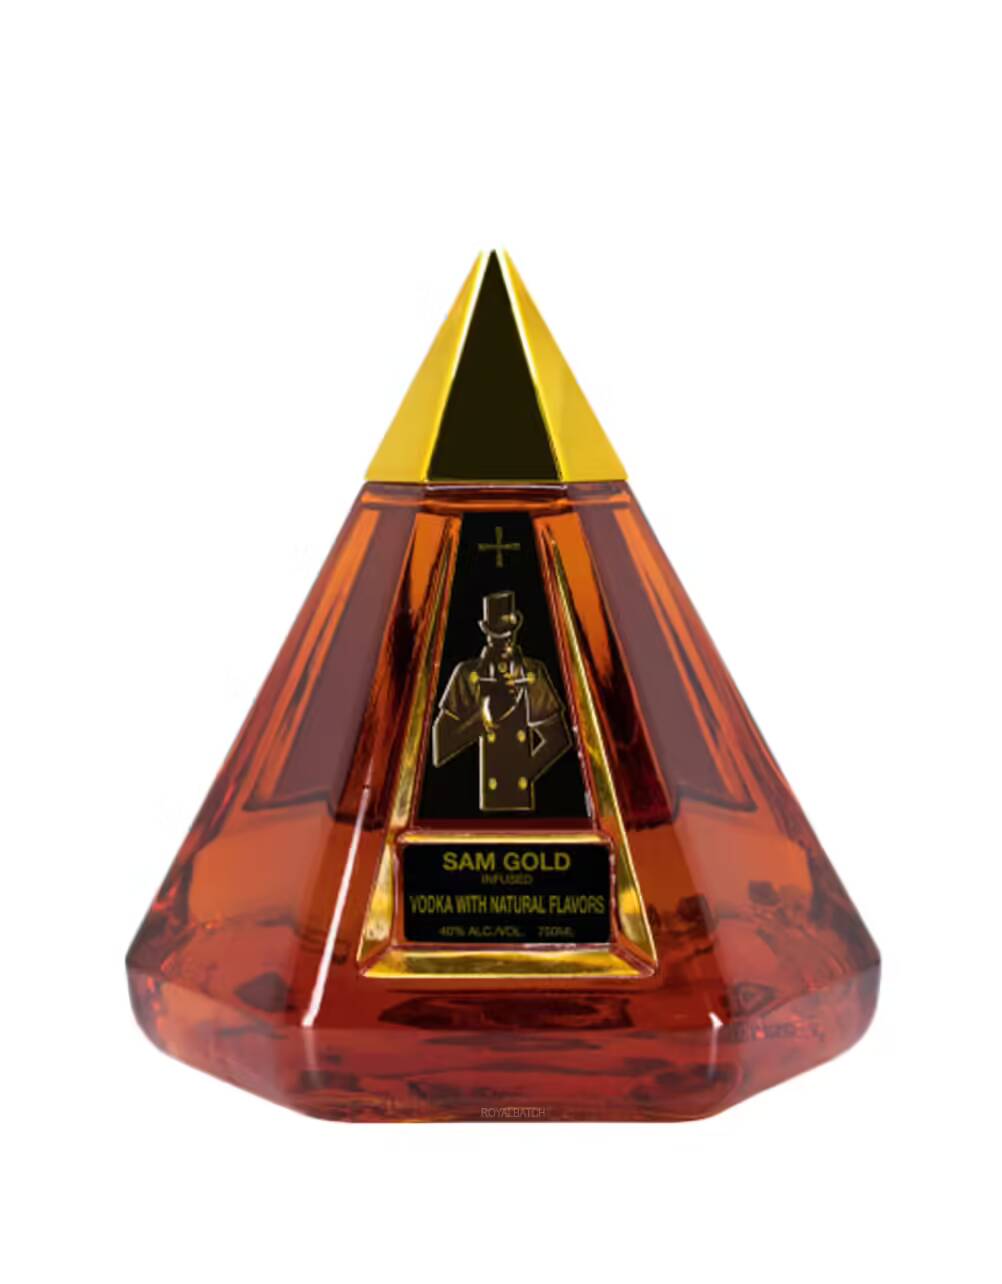 Sam Gold Pyramid Amberstone Vodka